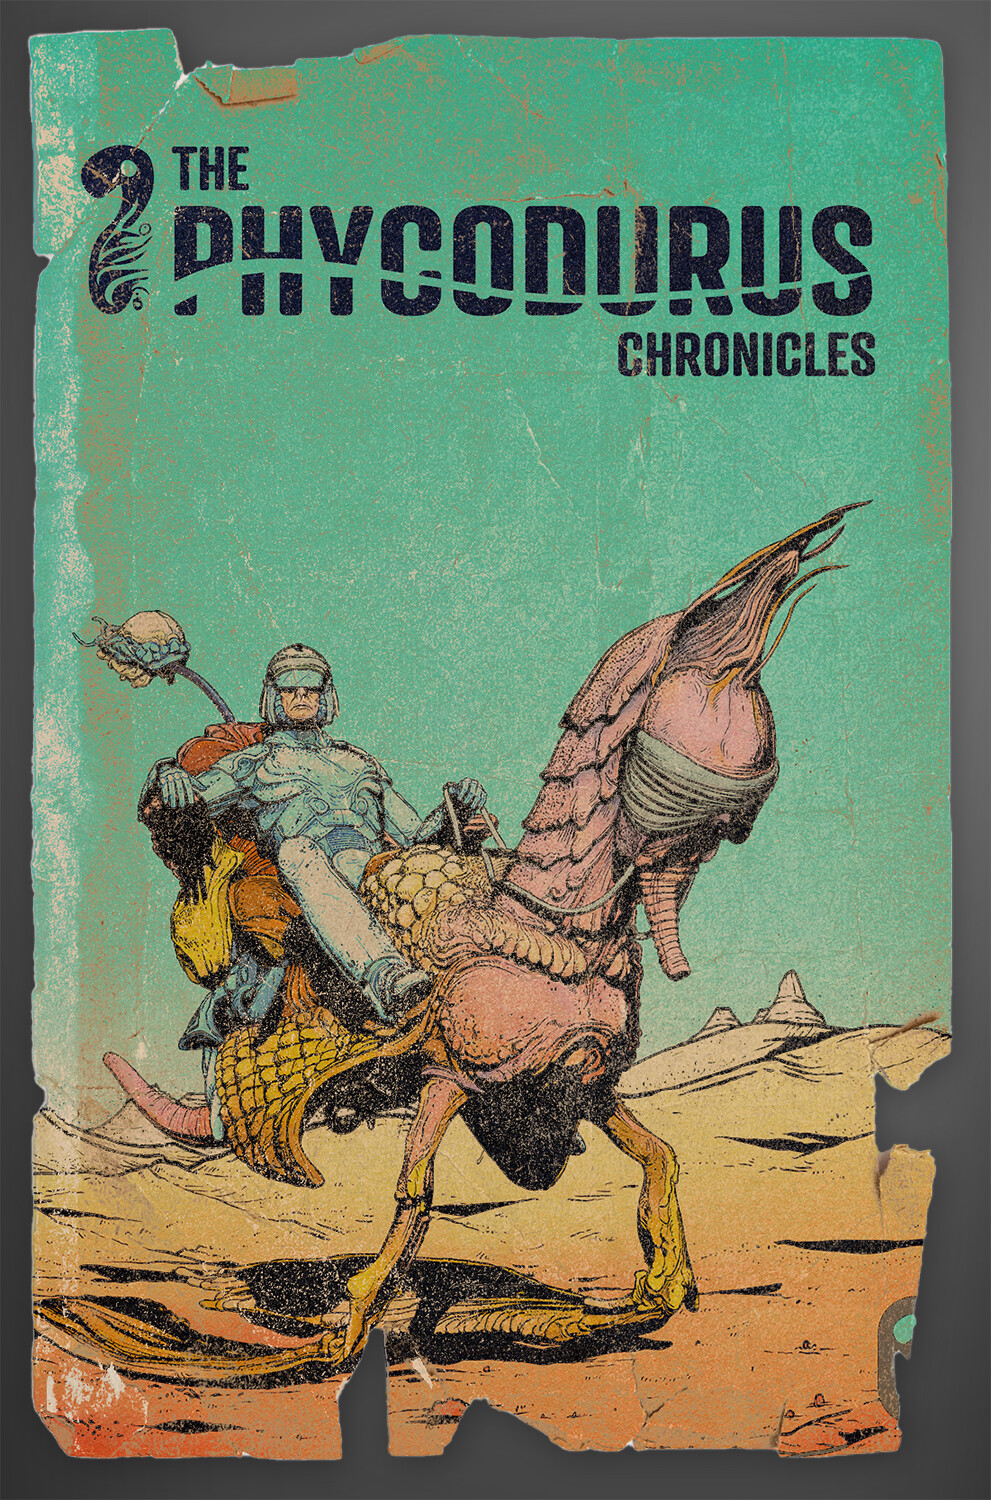 Phycodurus vintage comic book cover